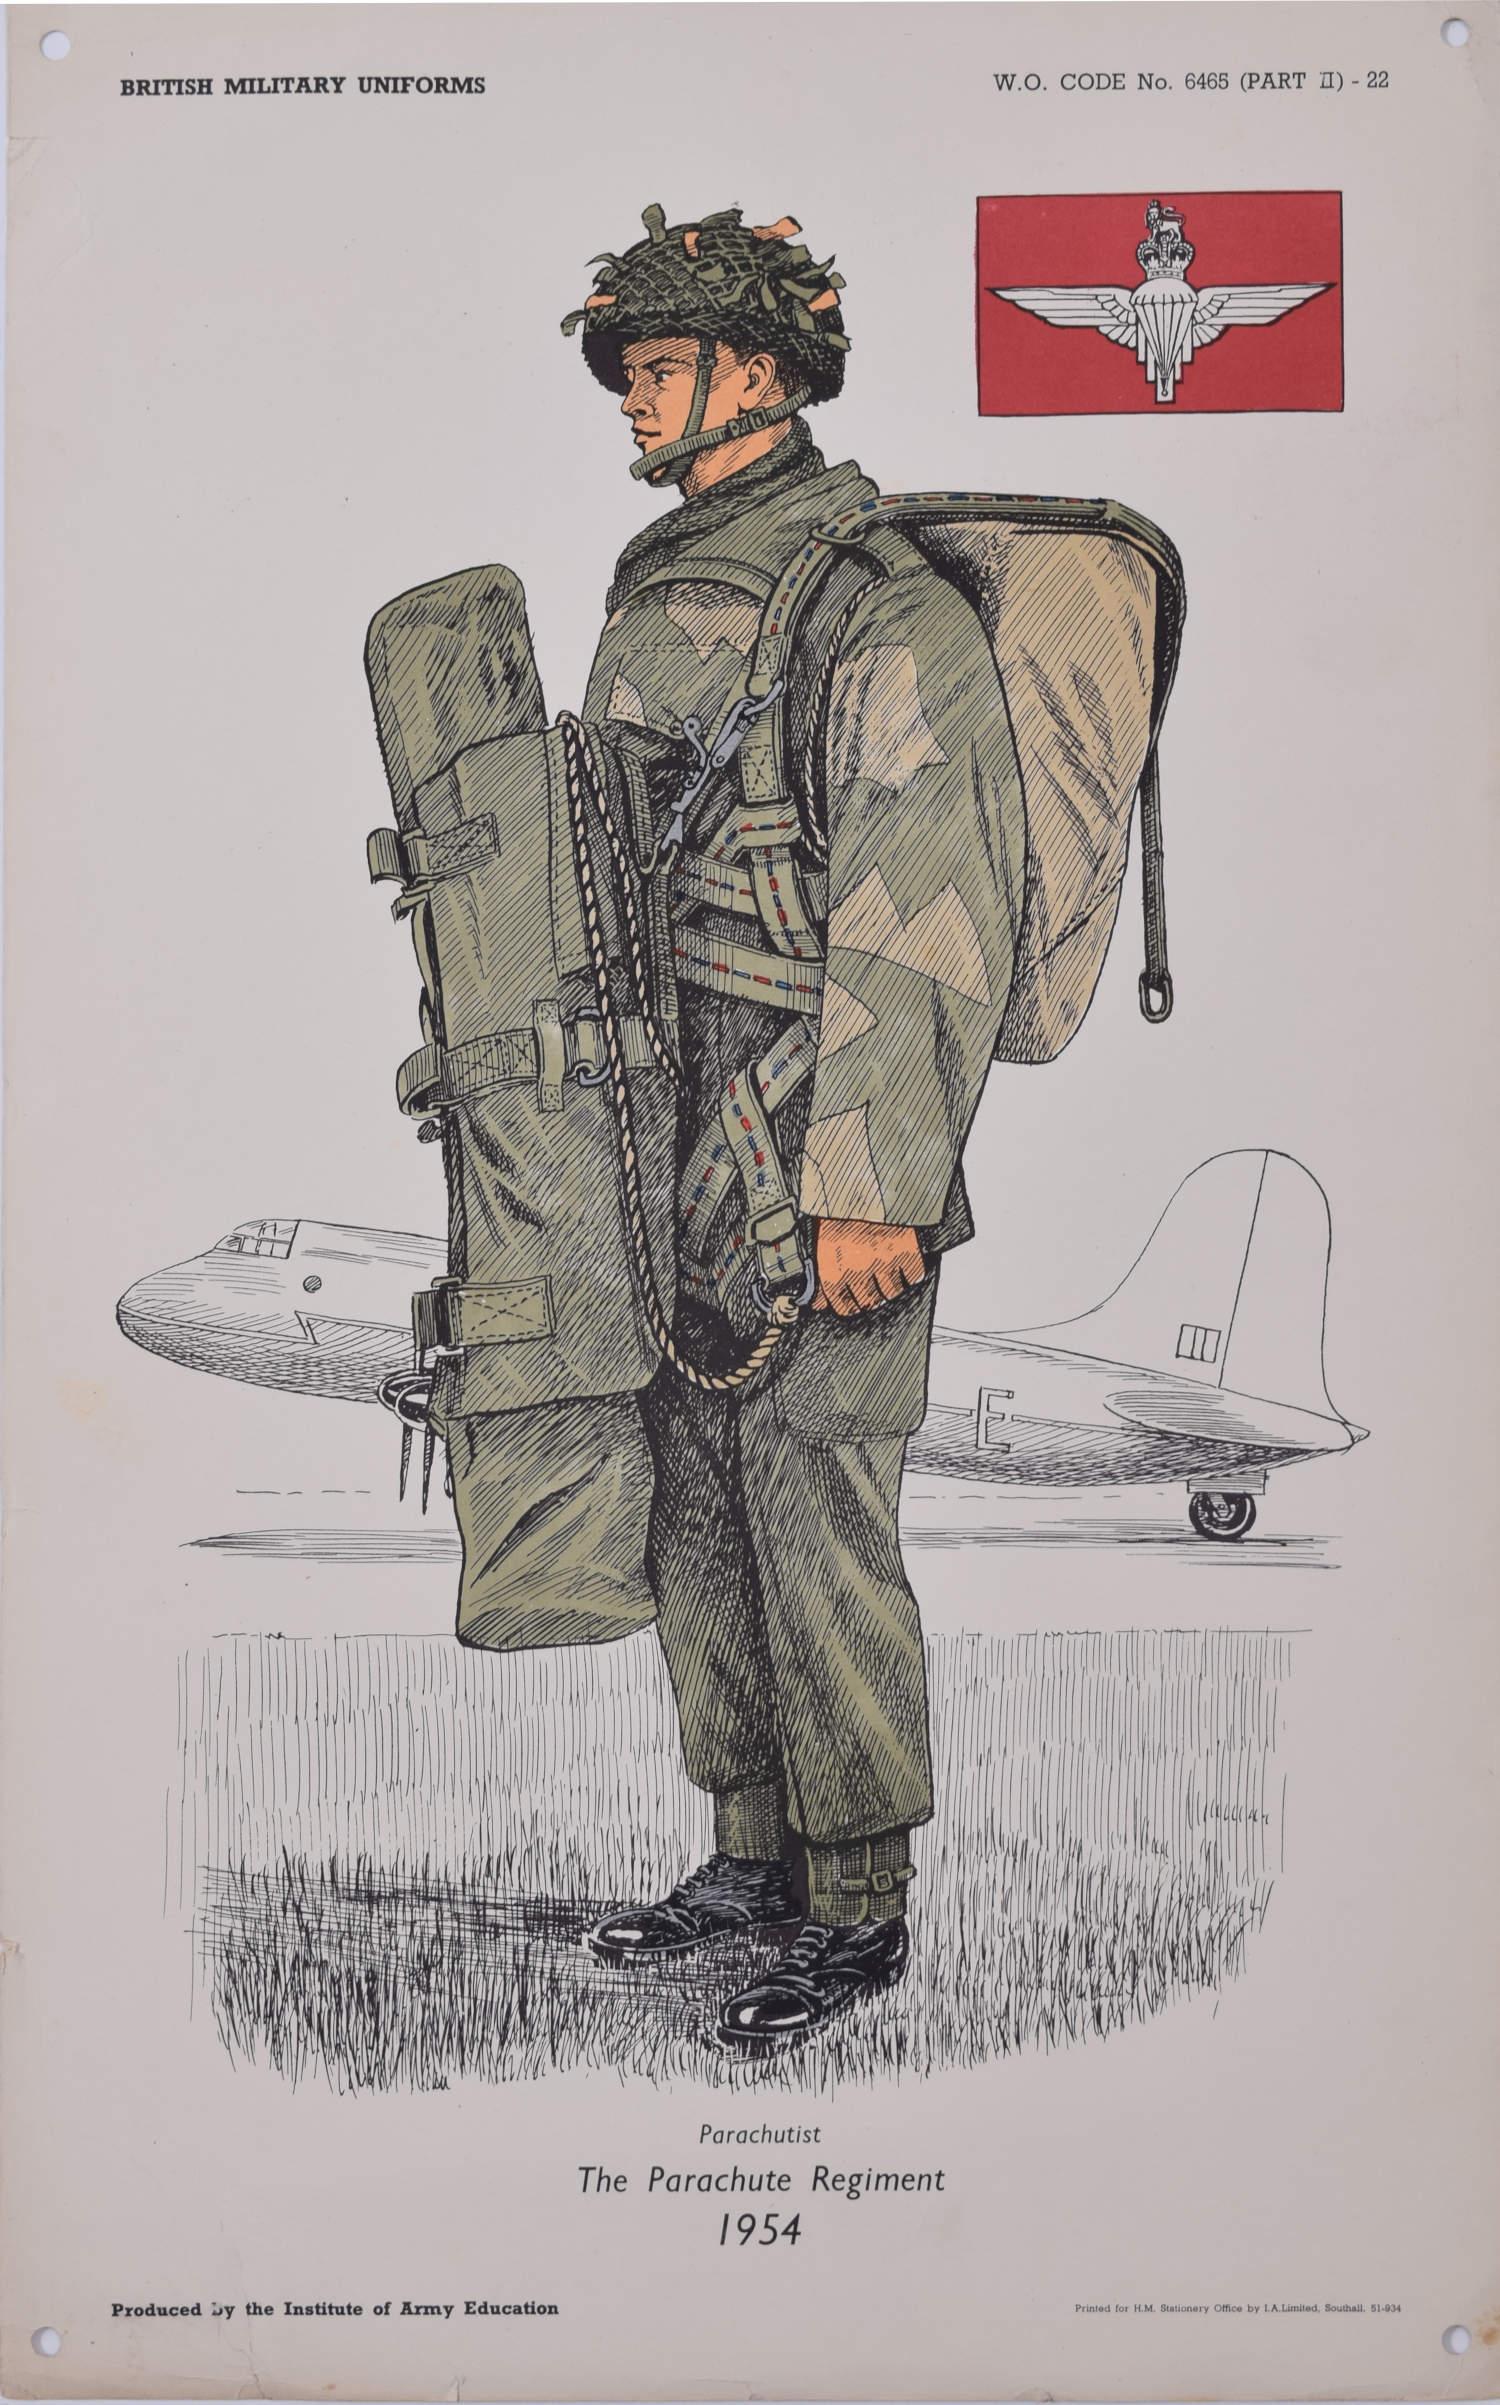 The Parachute Regiment Institute of Army Education 1954 uniform lithograph